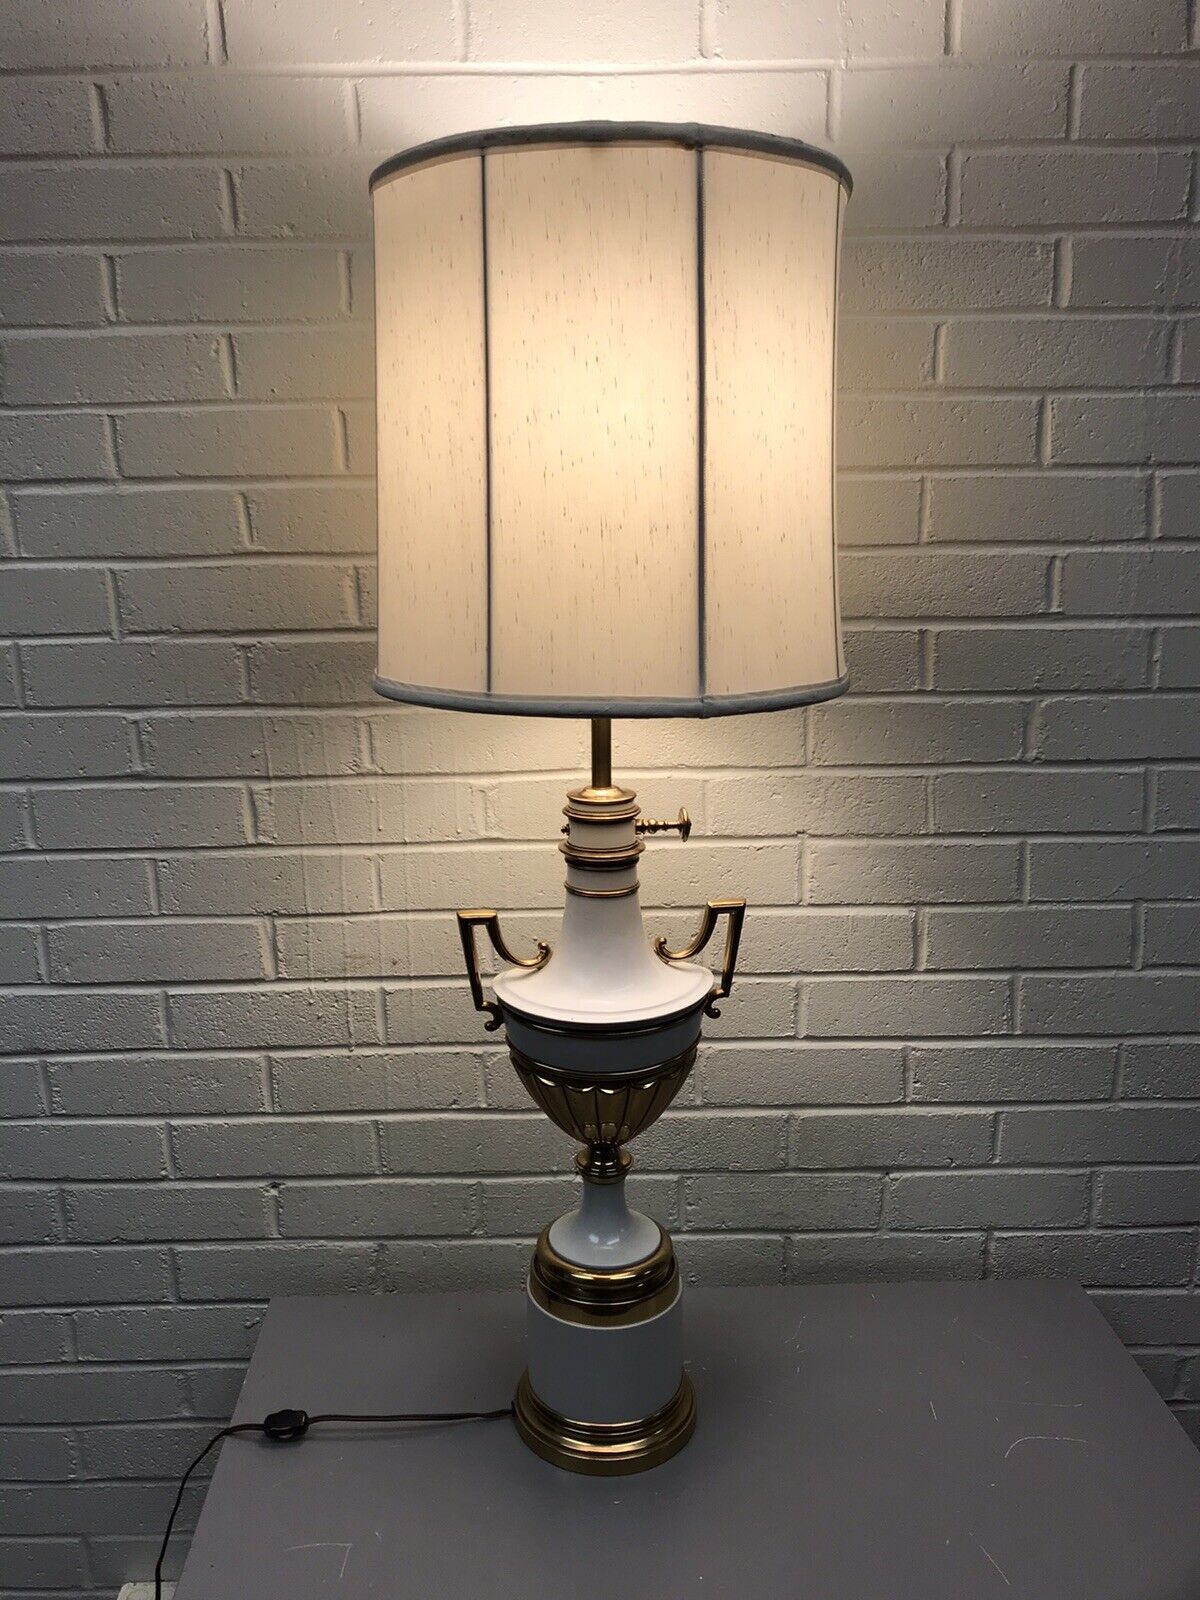 VTG GIANT STIFFEL HEAVY BRASS WHITE ENAMEL URN STYLE TABLE LAMP 40” TALL BEAUTY